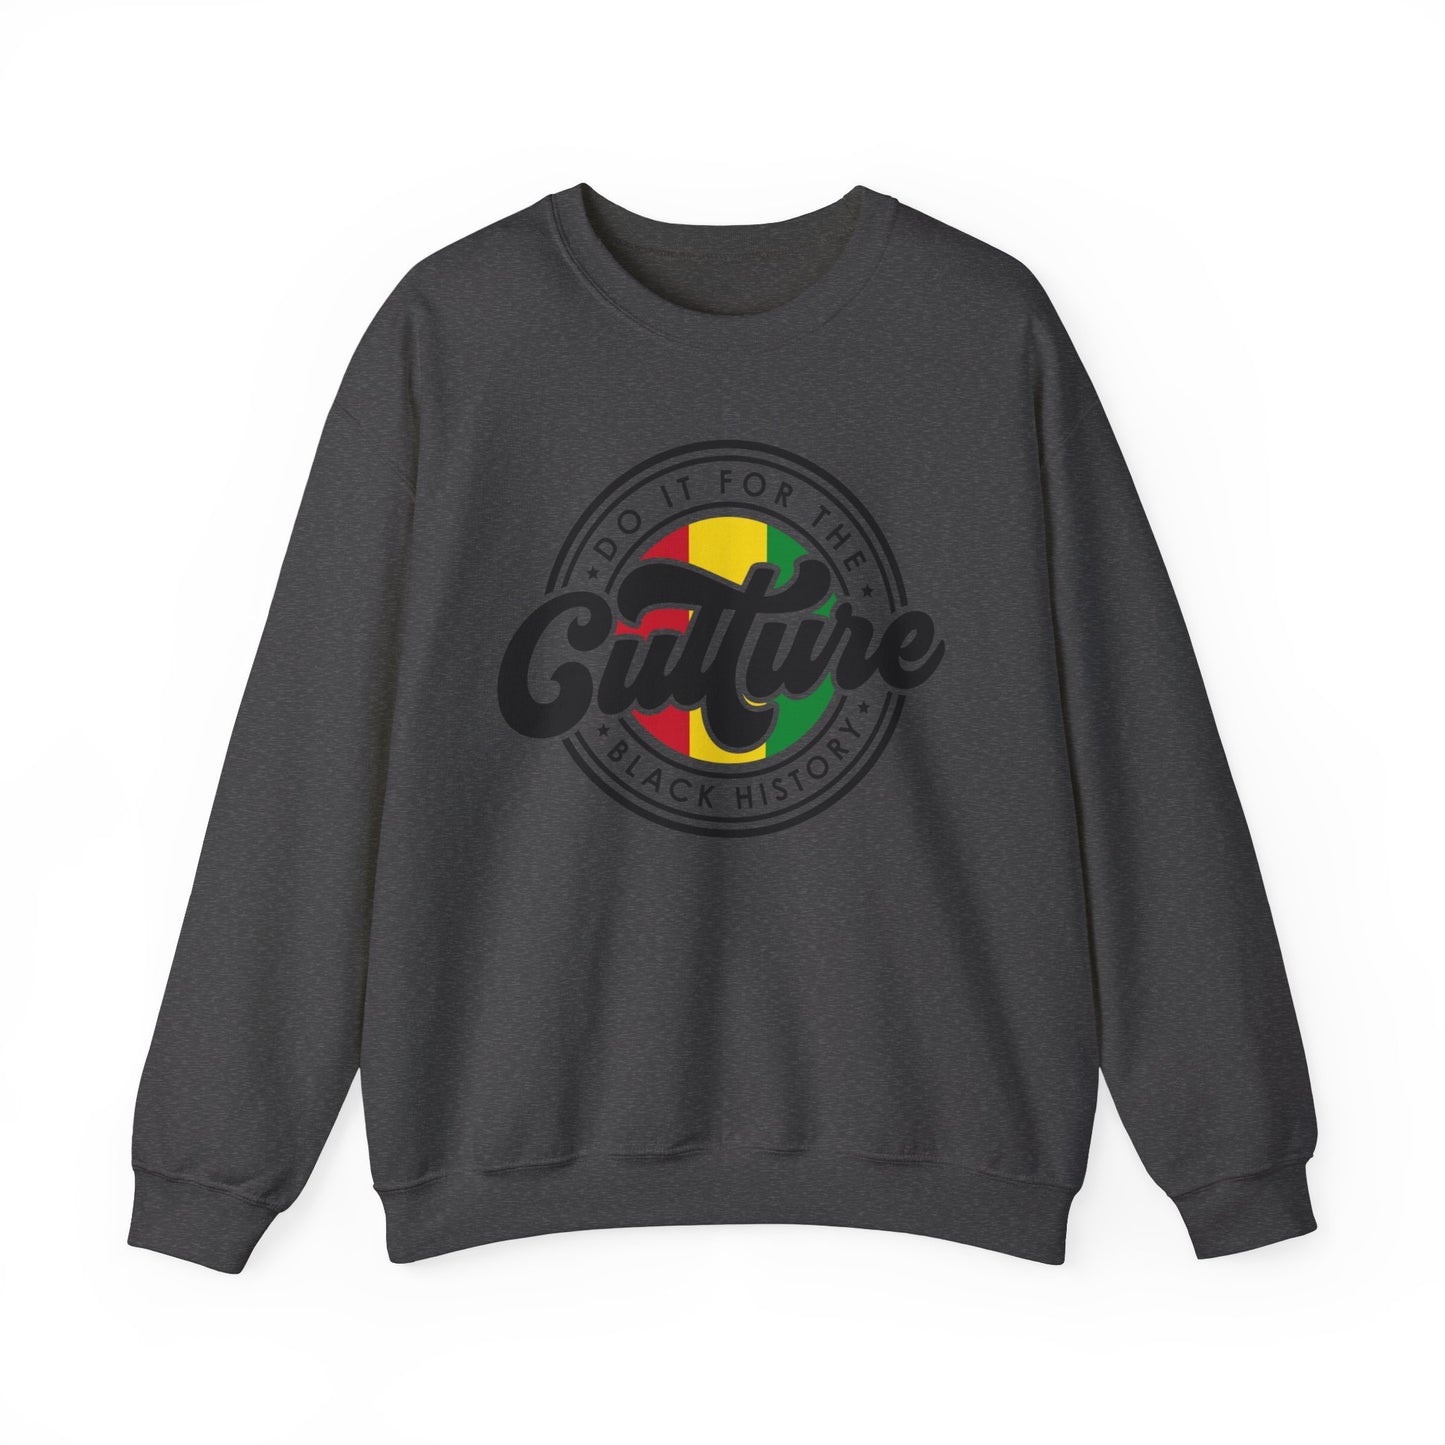 Do It For the Culture (Black) Crewneck Sweatshirt